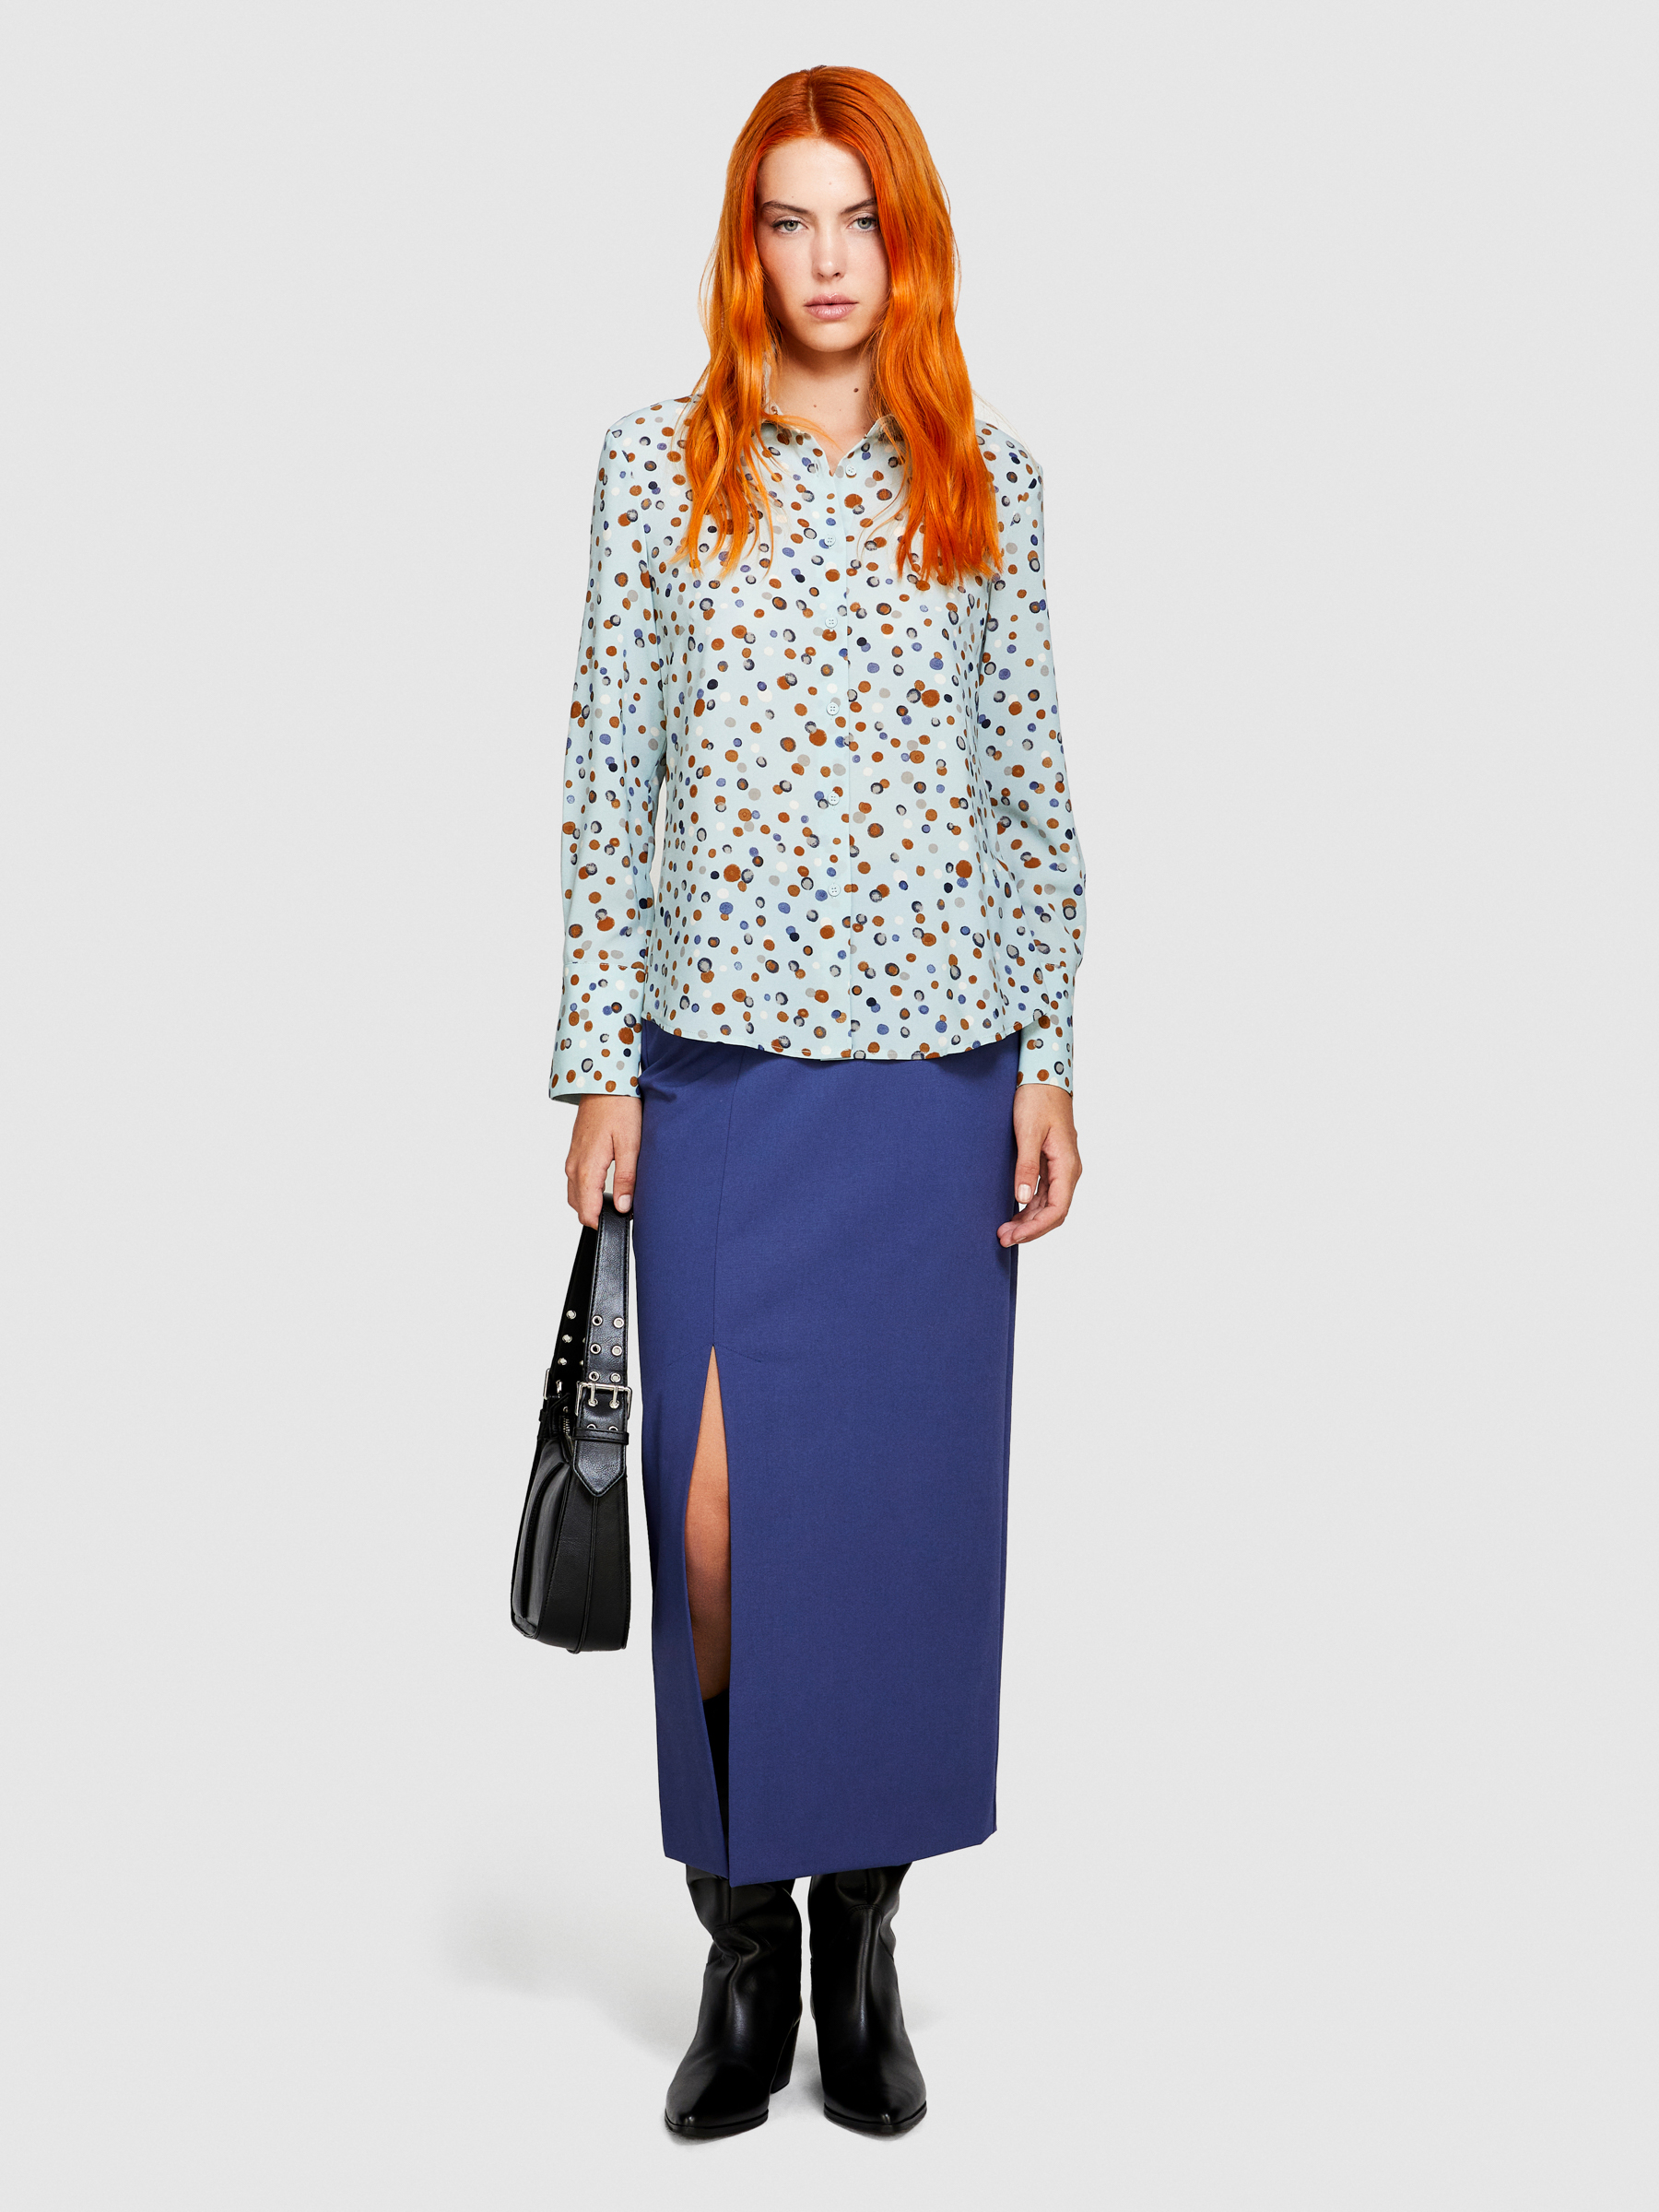 Sisley - Printed Shirt, Woman, Multi-color, Size: XS